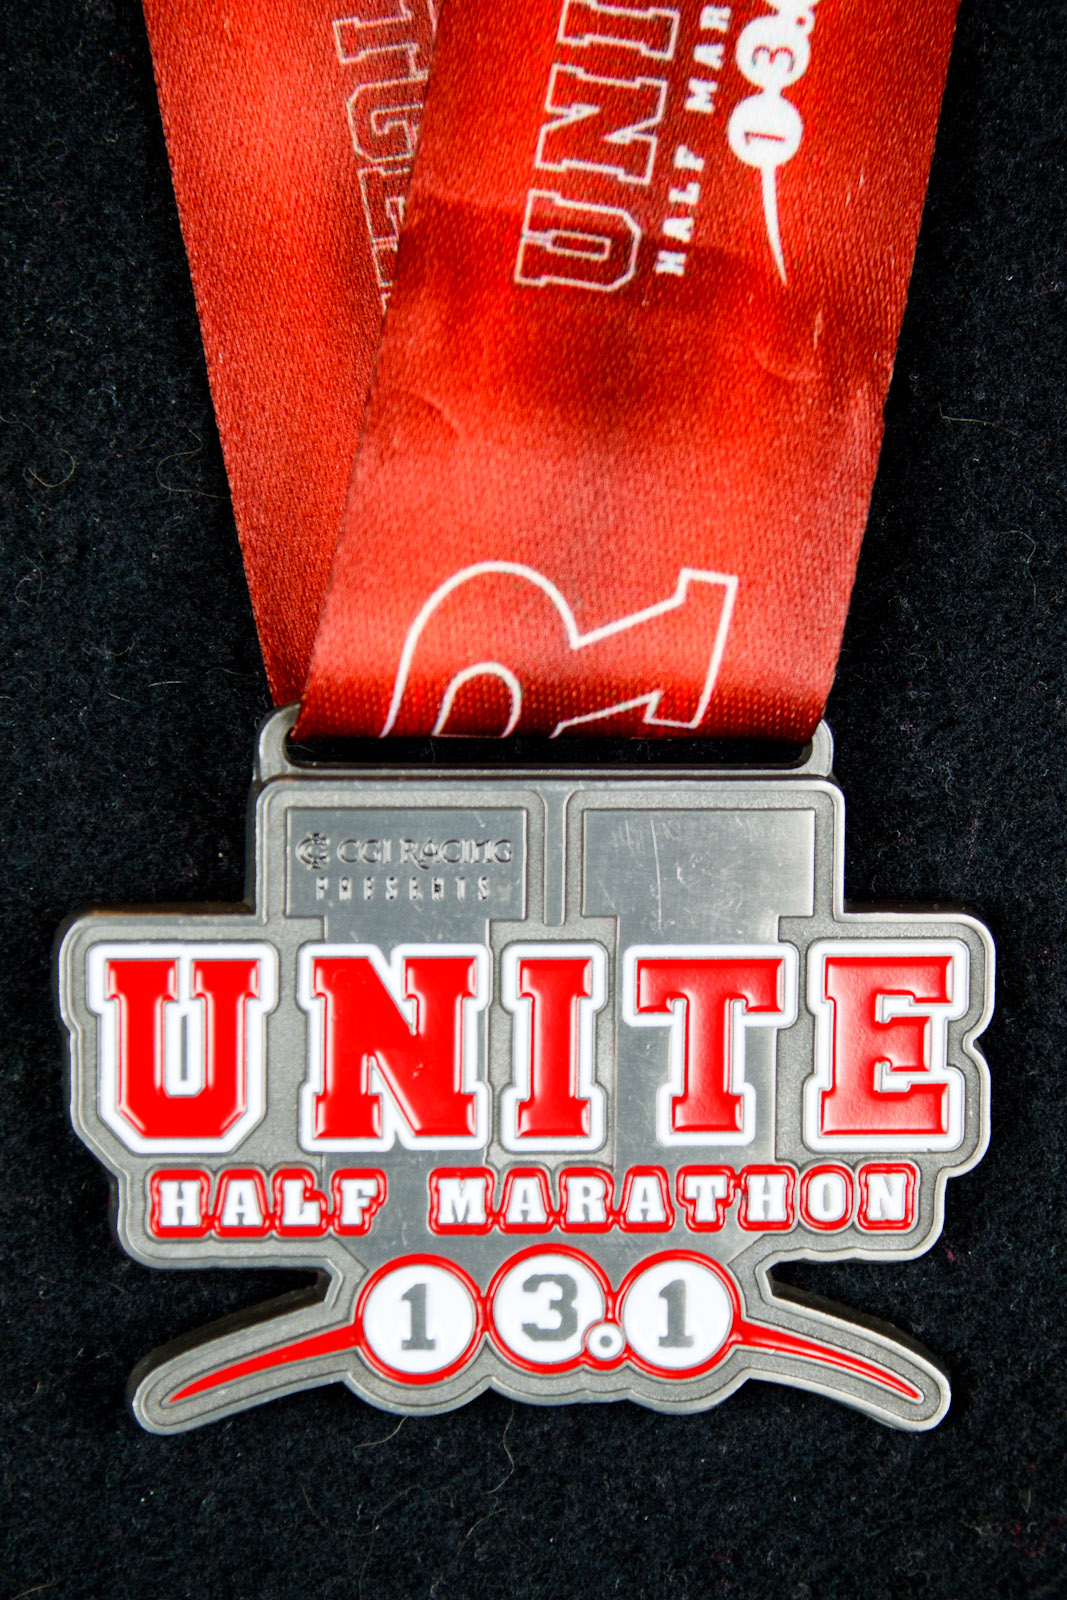 Unite 2011 medal